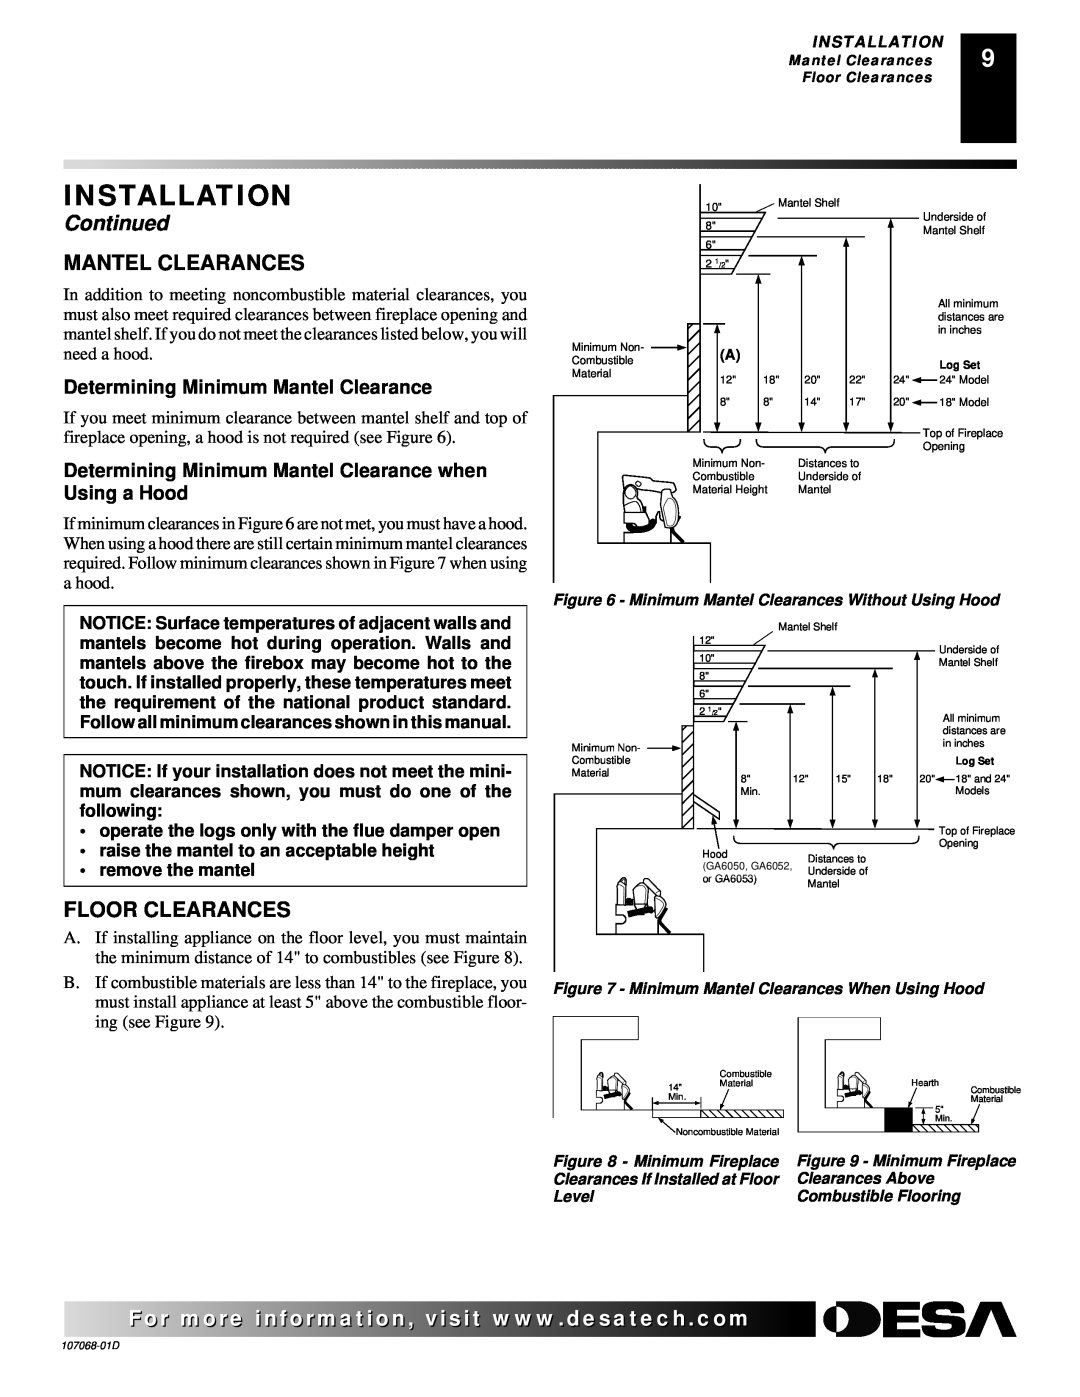 Desa CGS3124P installation manual Mantel Clearances, Floor Clearances, Installation, Continued 